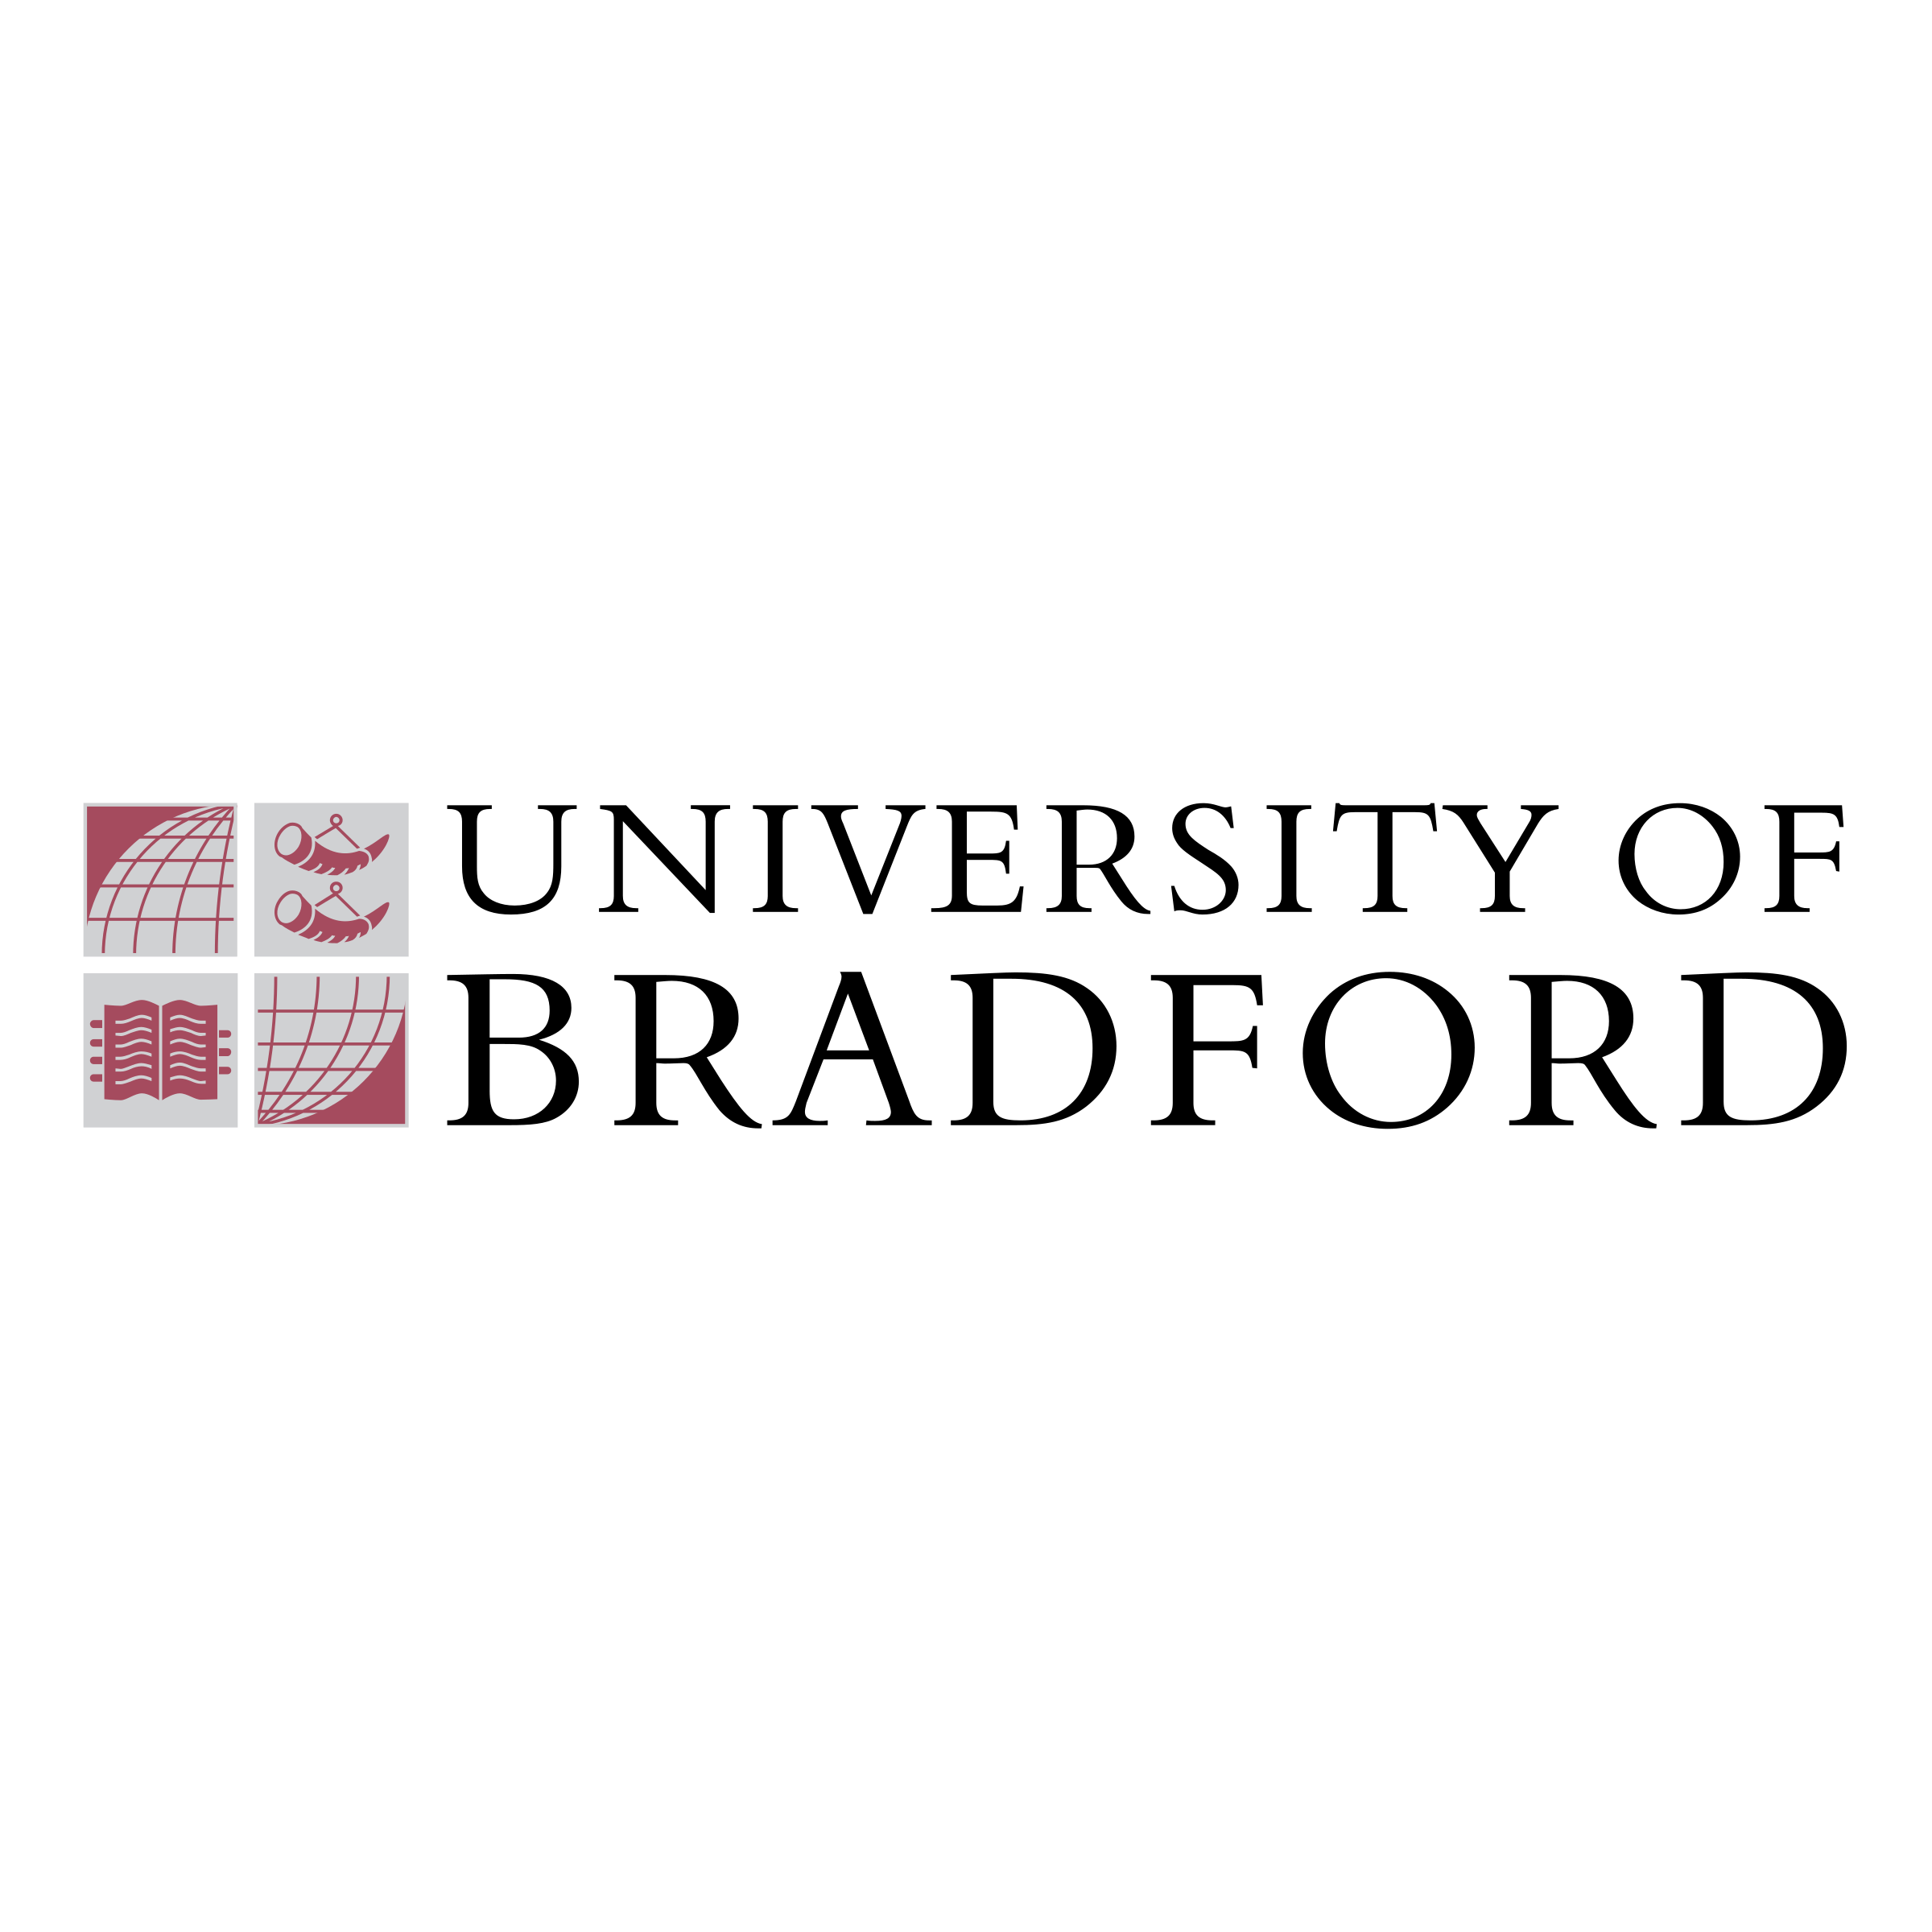 Bradford Logo - University of Bradford Logo PNG Transparent & SVG Vector - Freebie ...